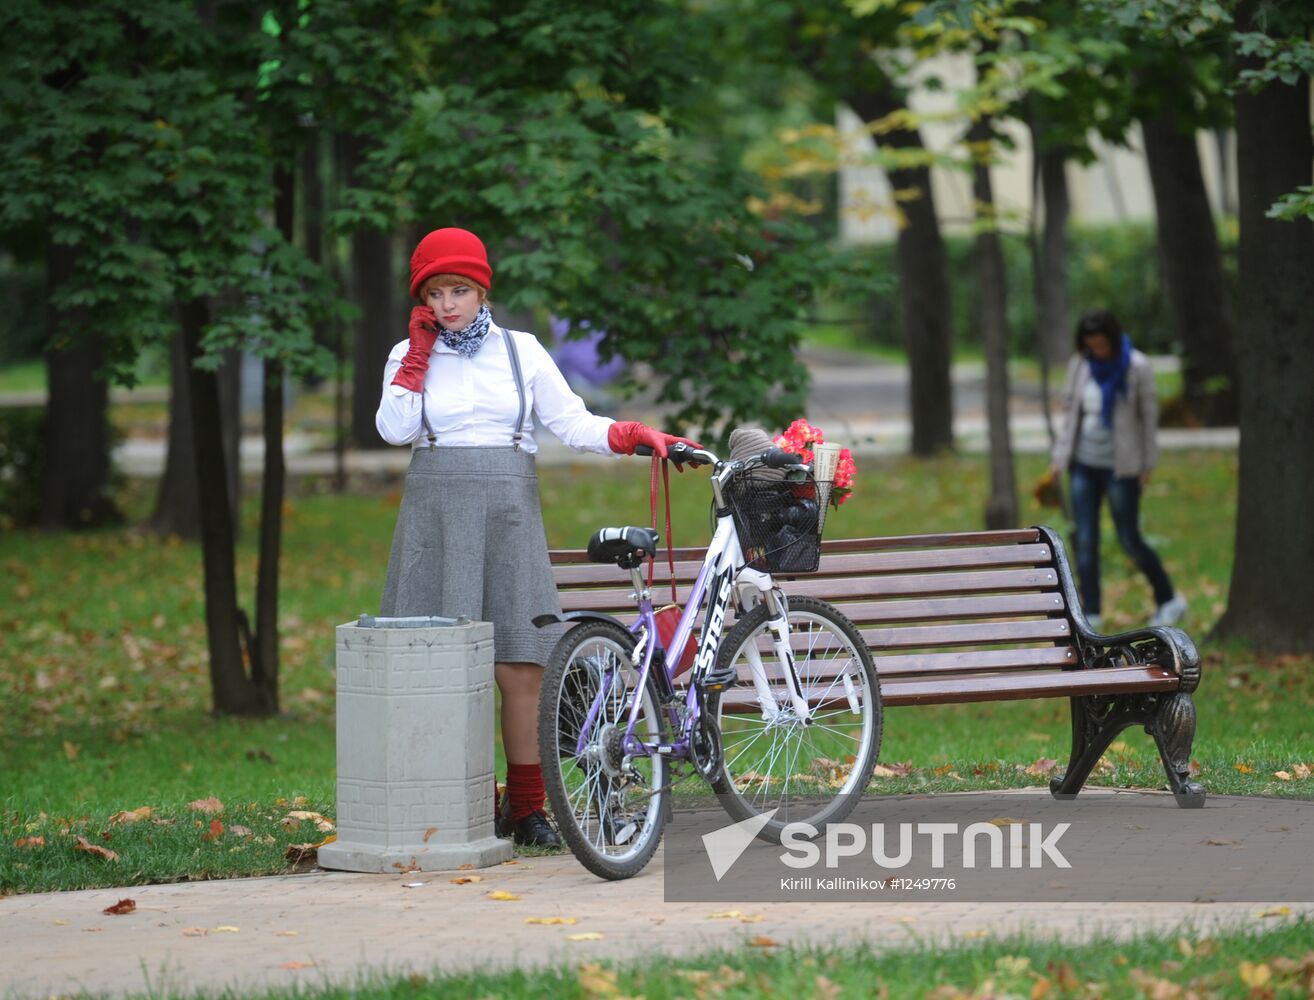 Tweed Ride Moscow in Sokolniki Park